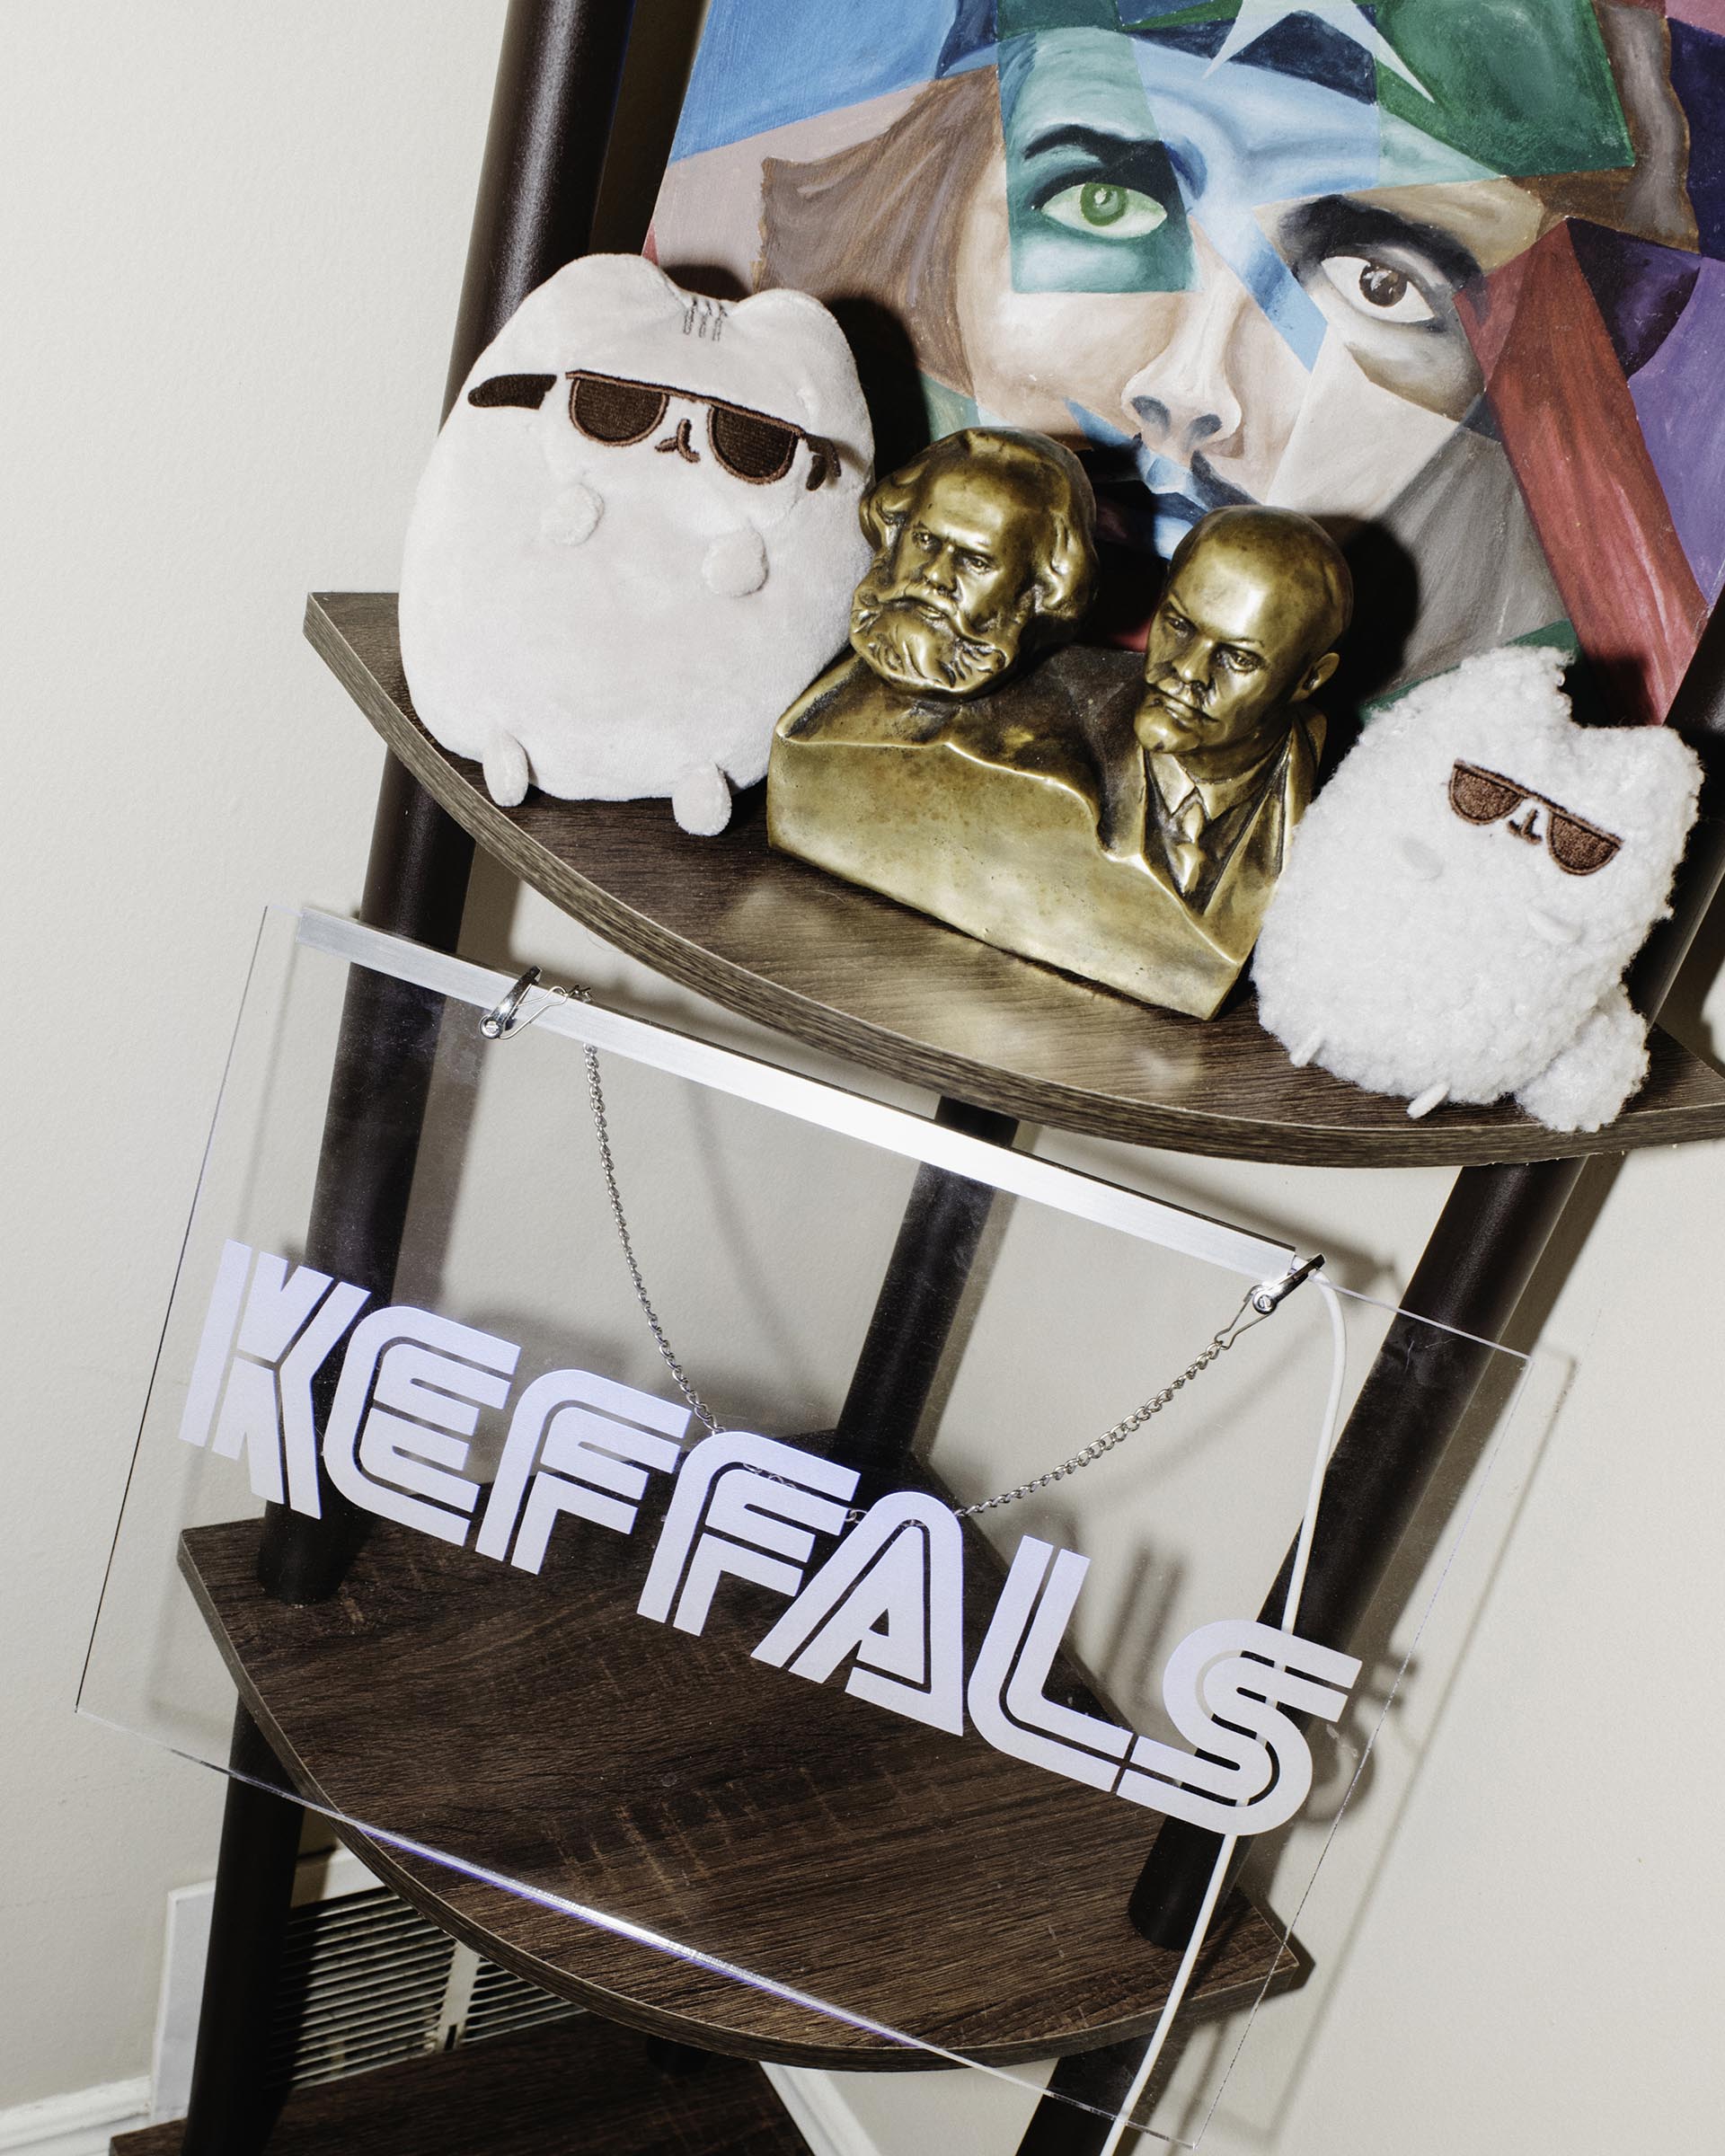 "Keffals" es el alias online de Sorrenti.